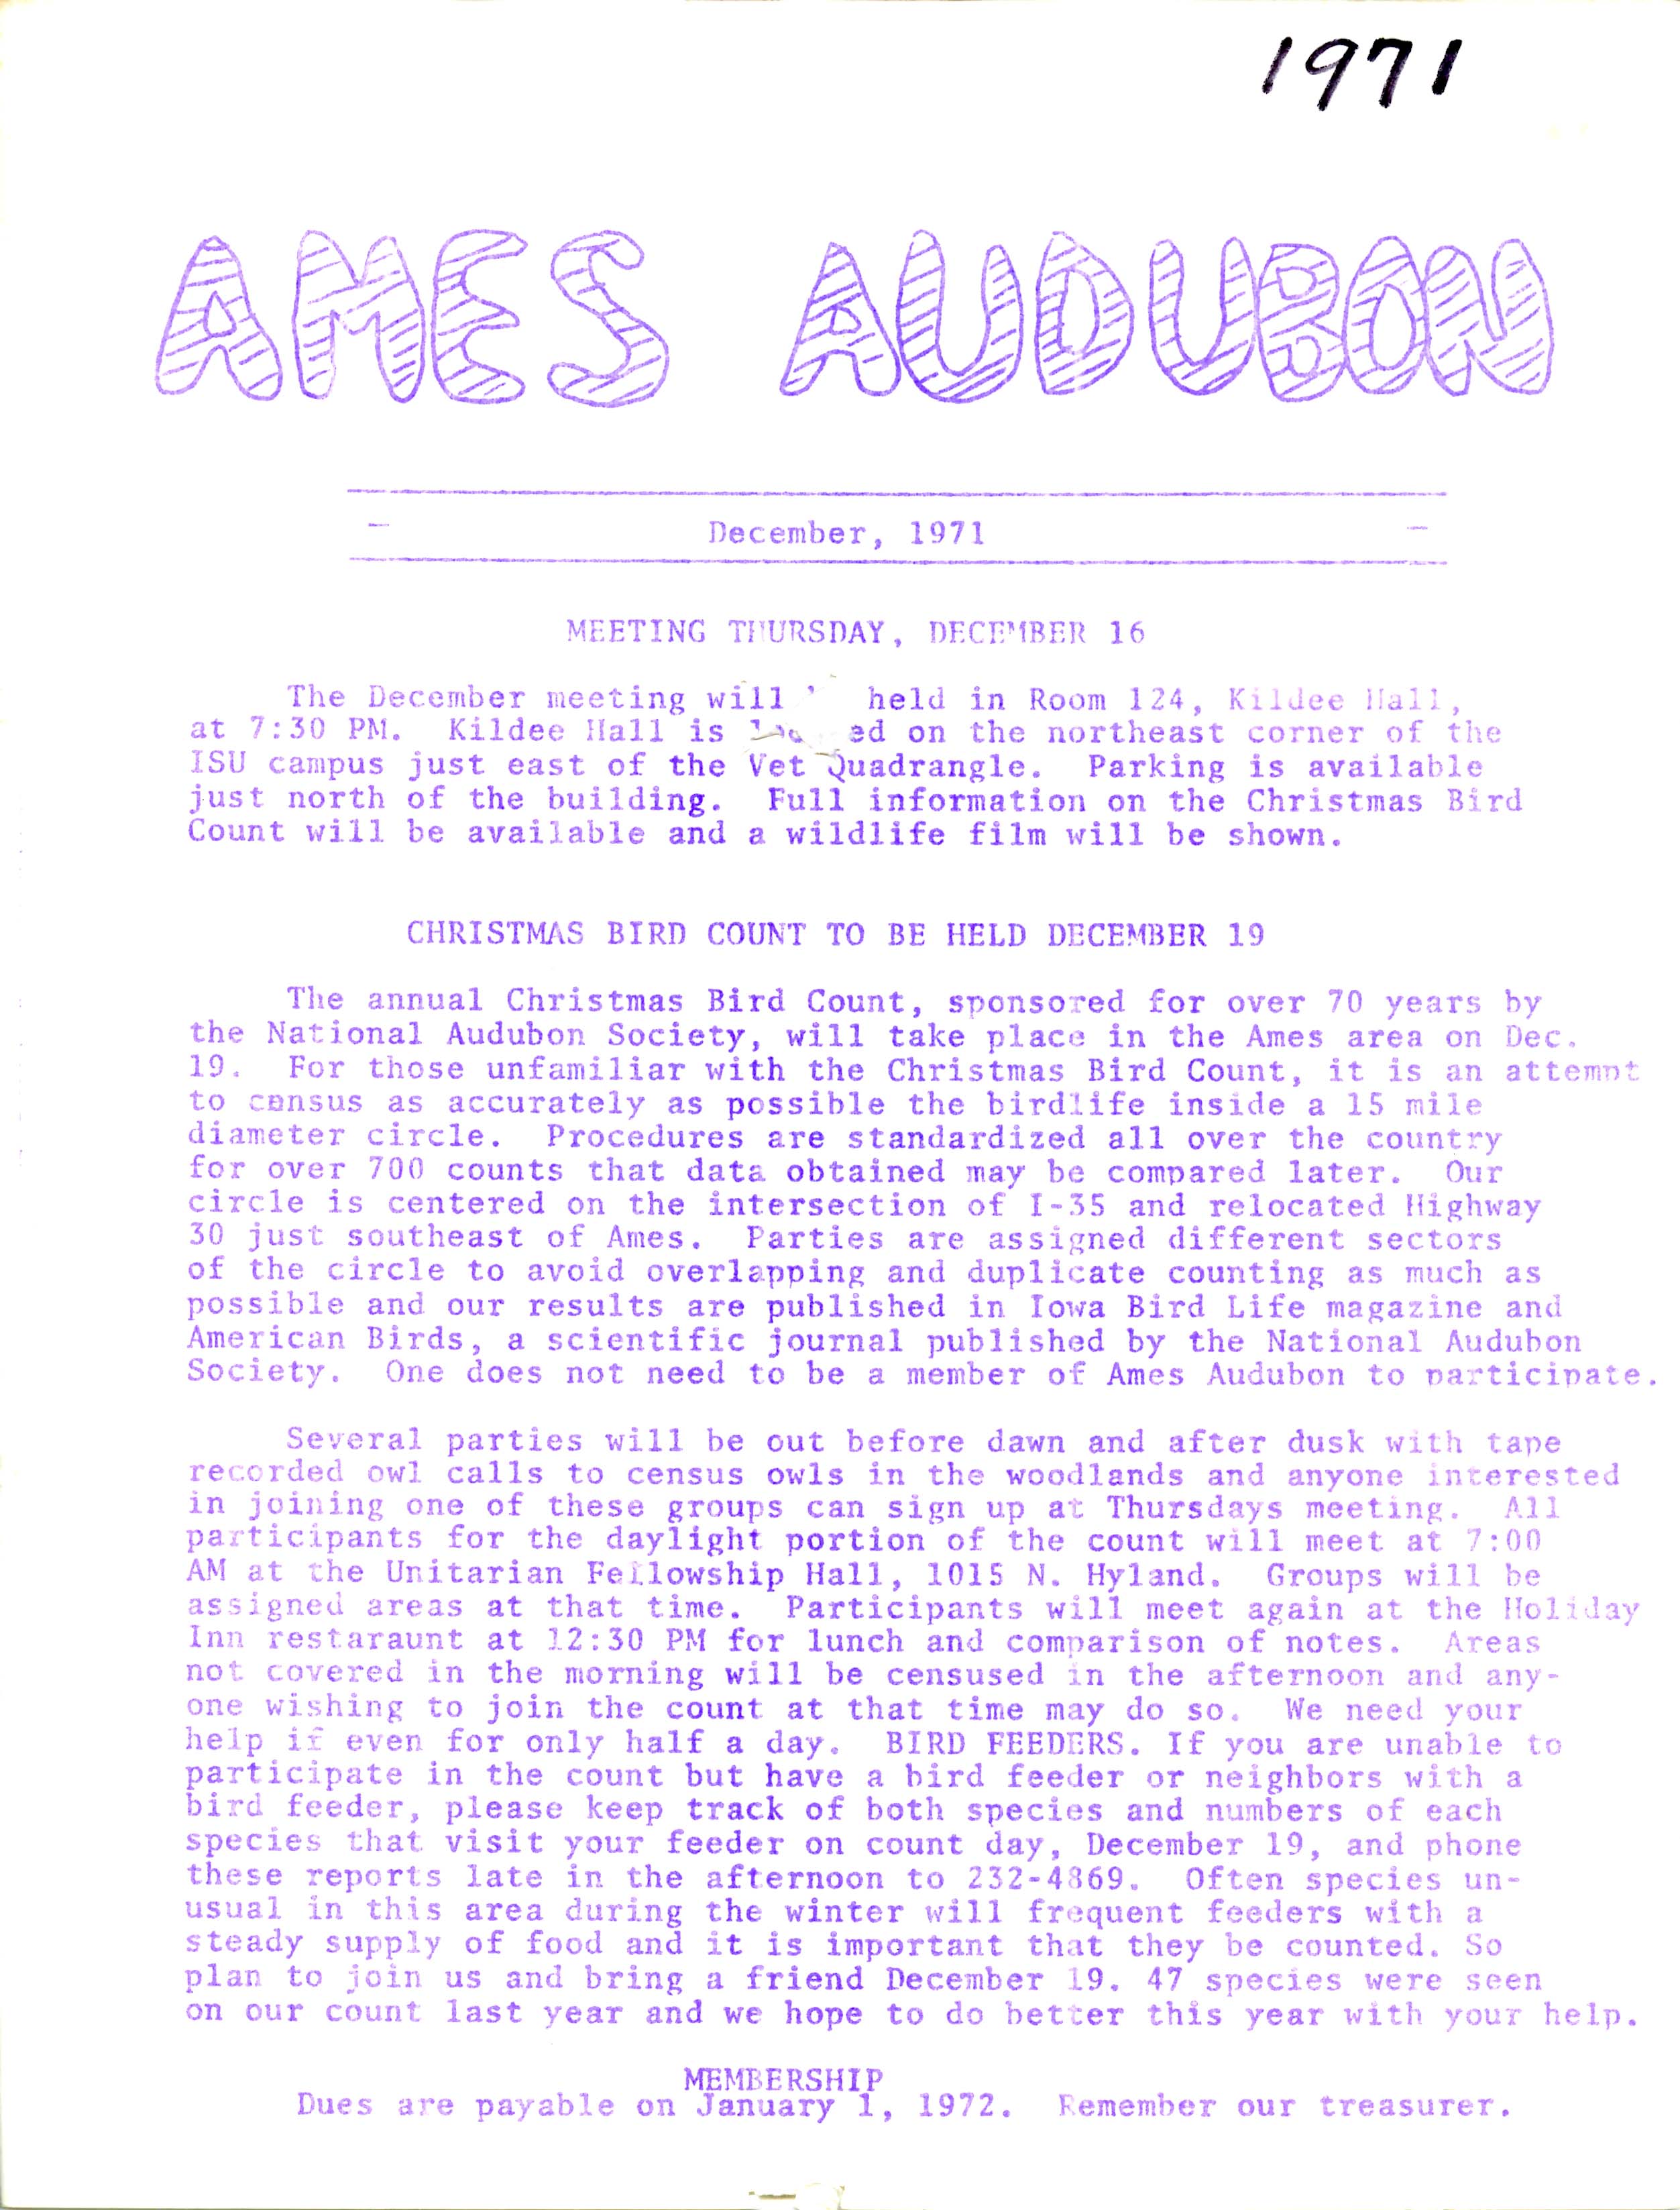 Ames Audubon, December 1971